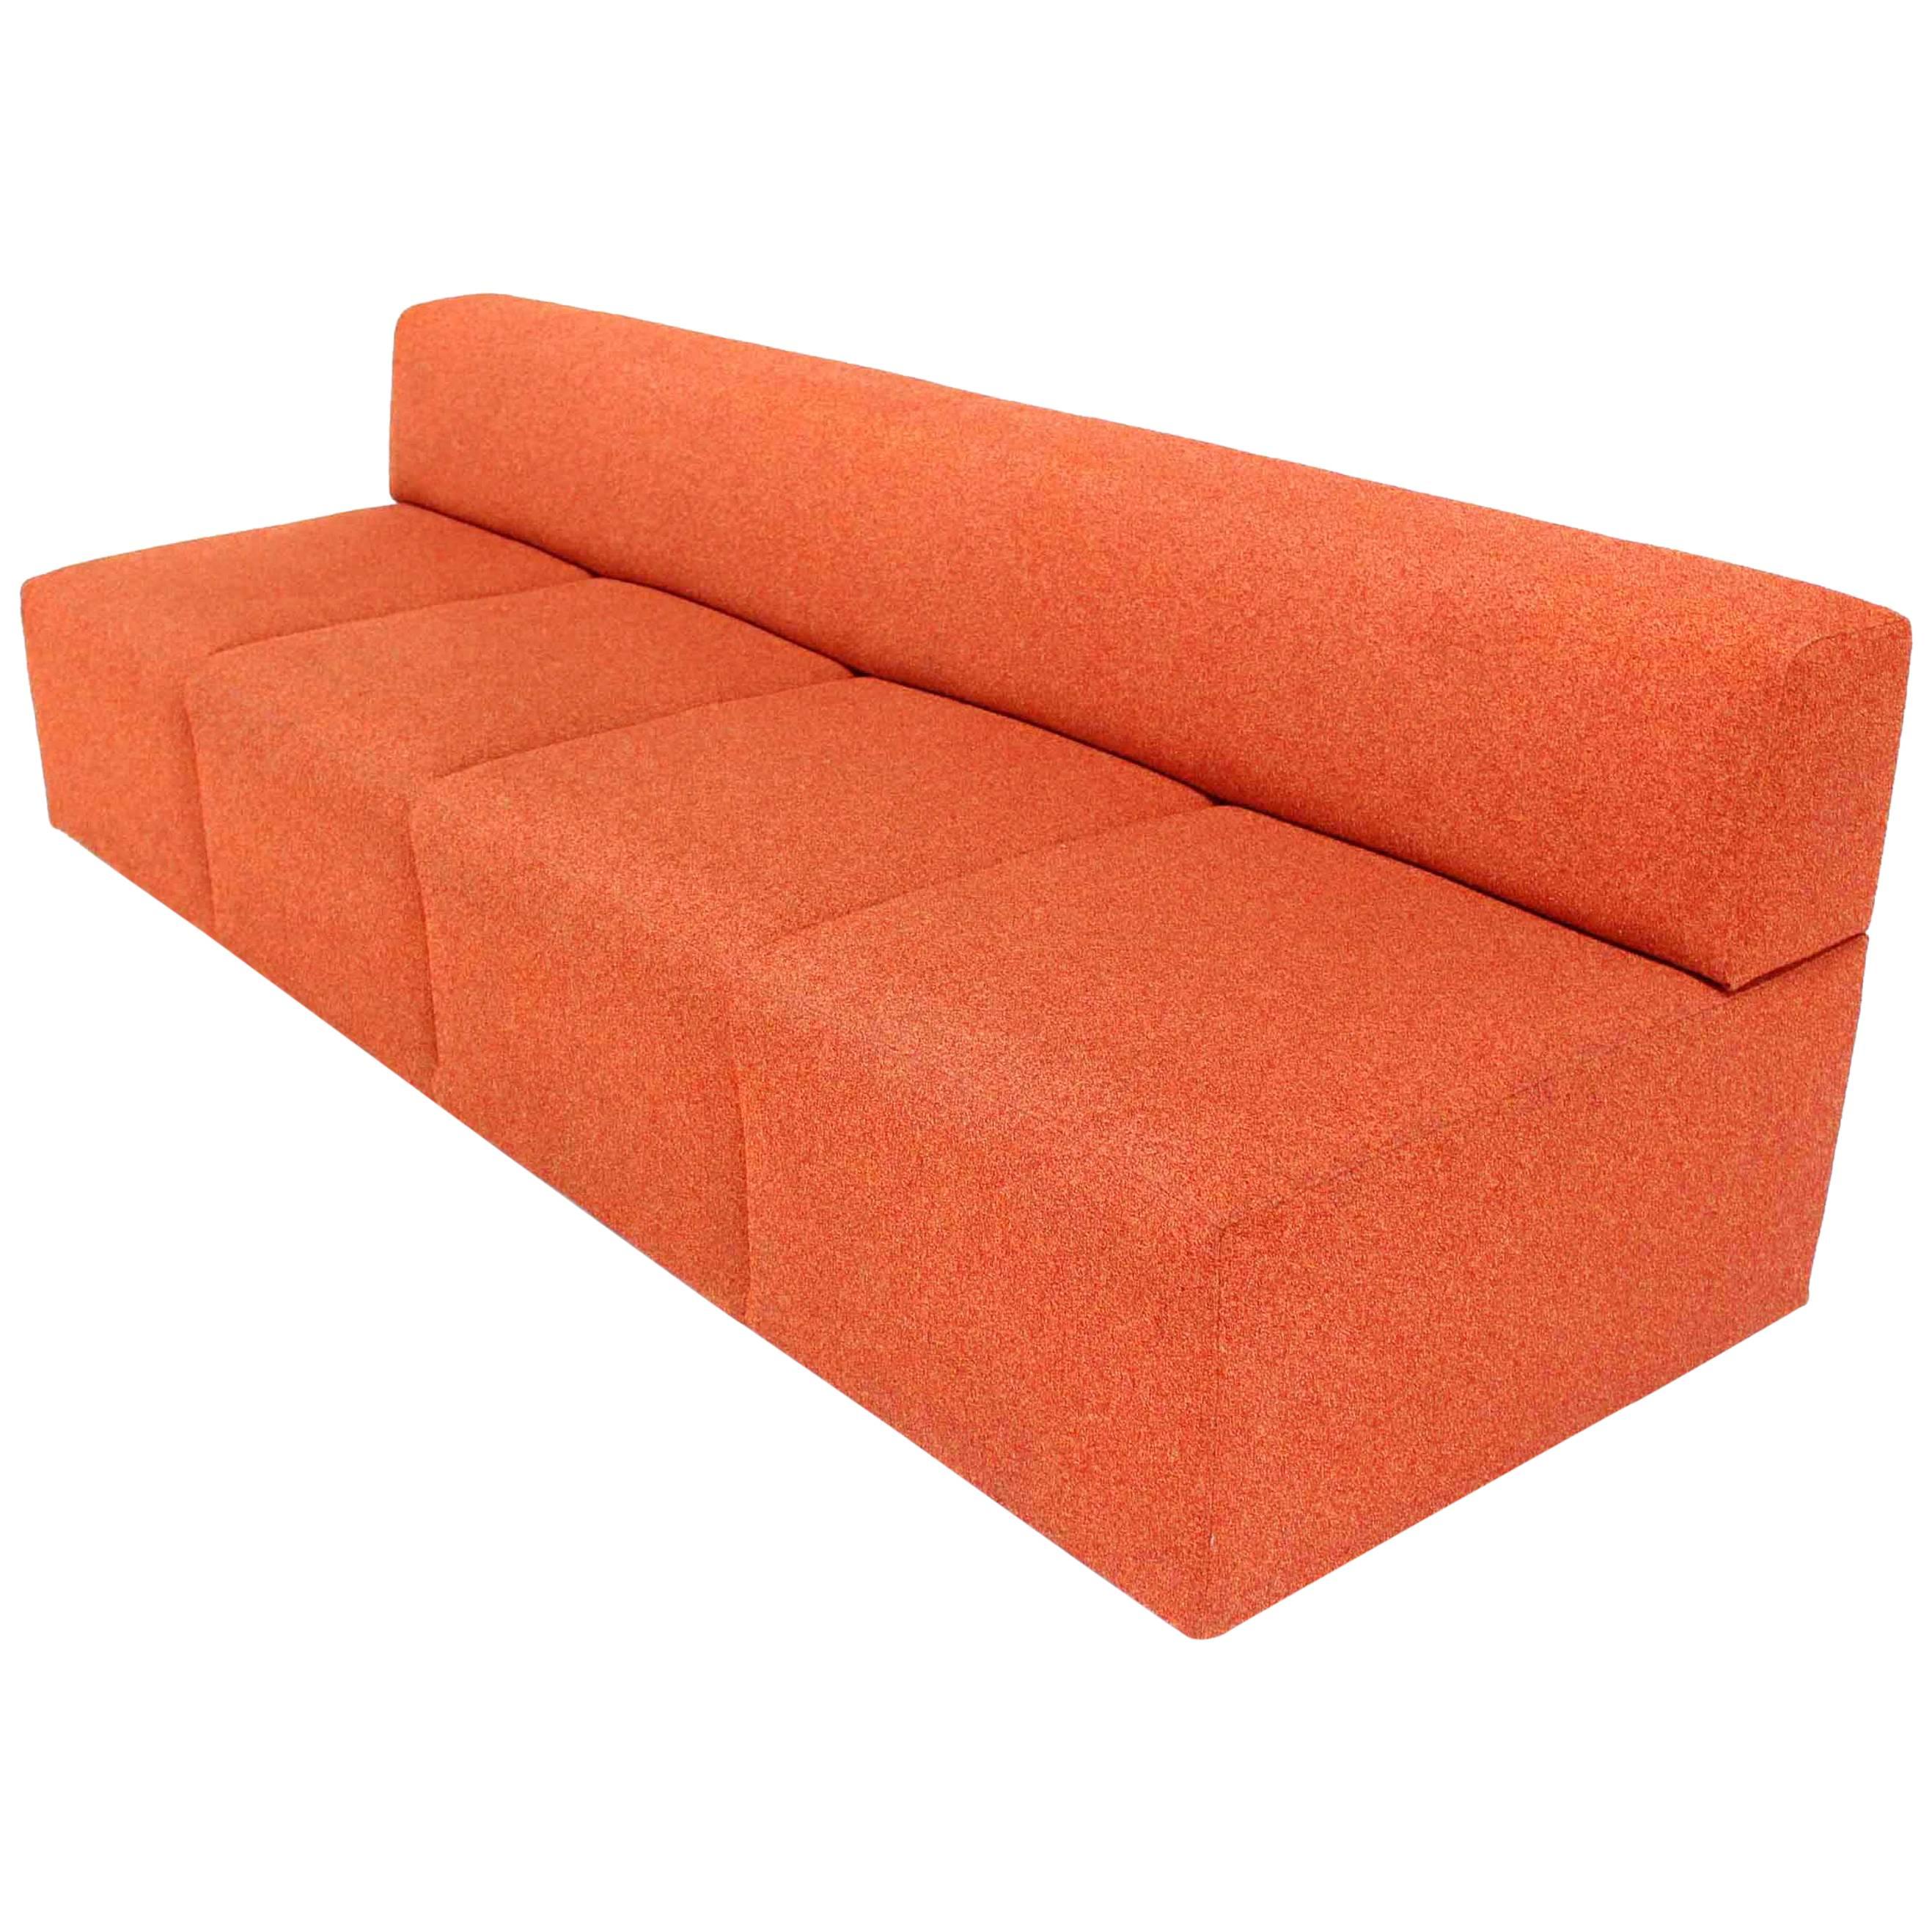 Orange Upholstery Steelcase Sofa Booth